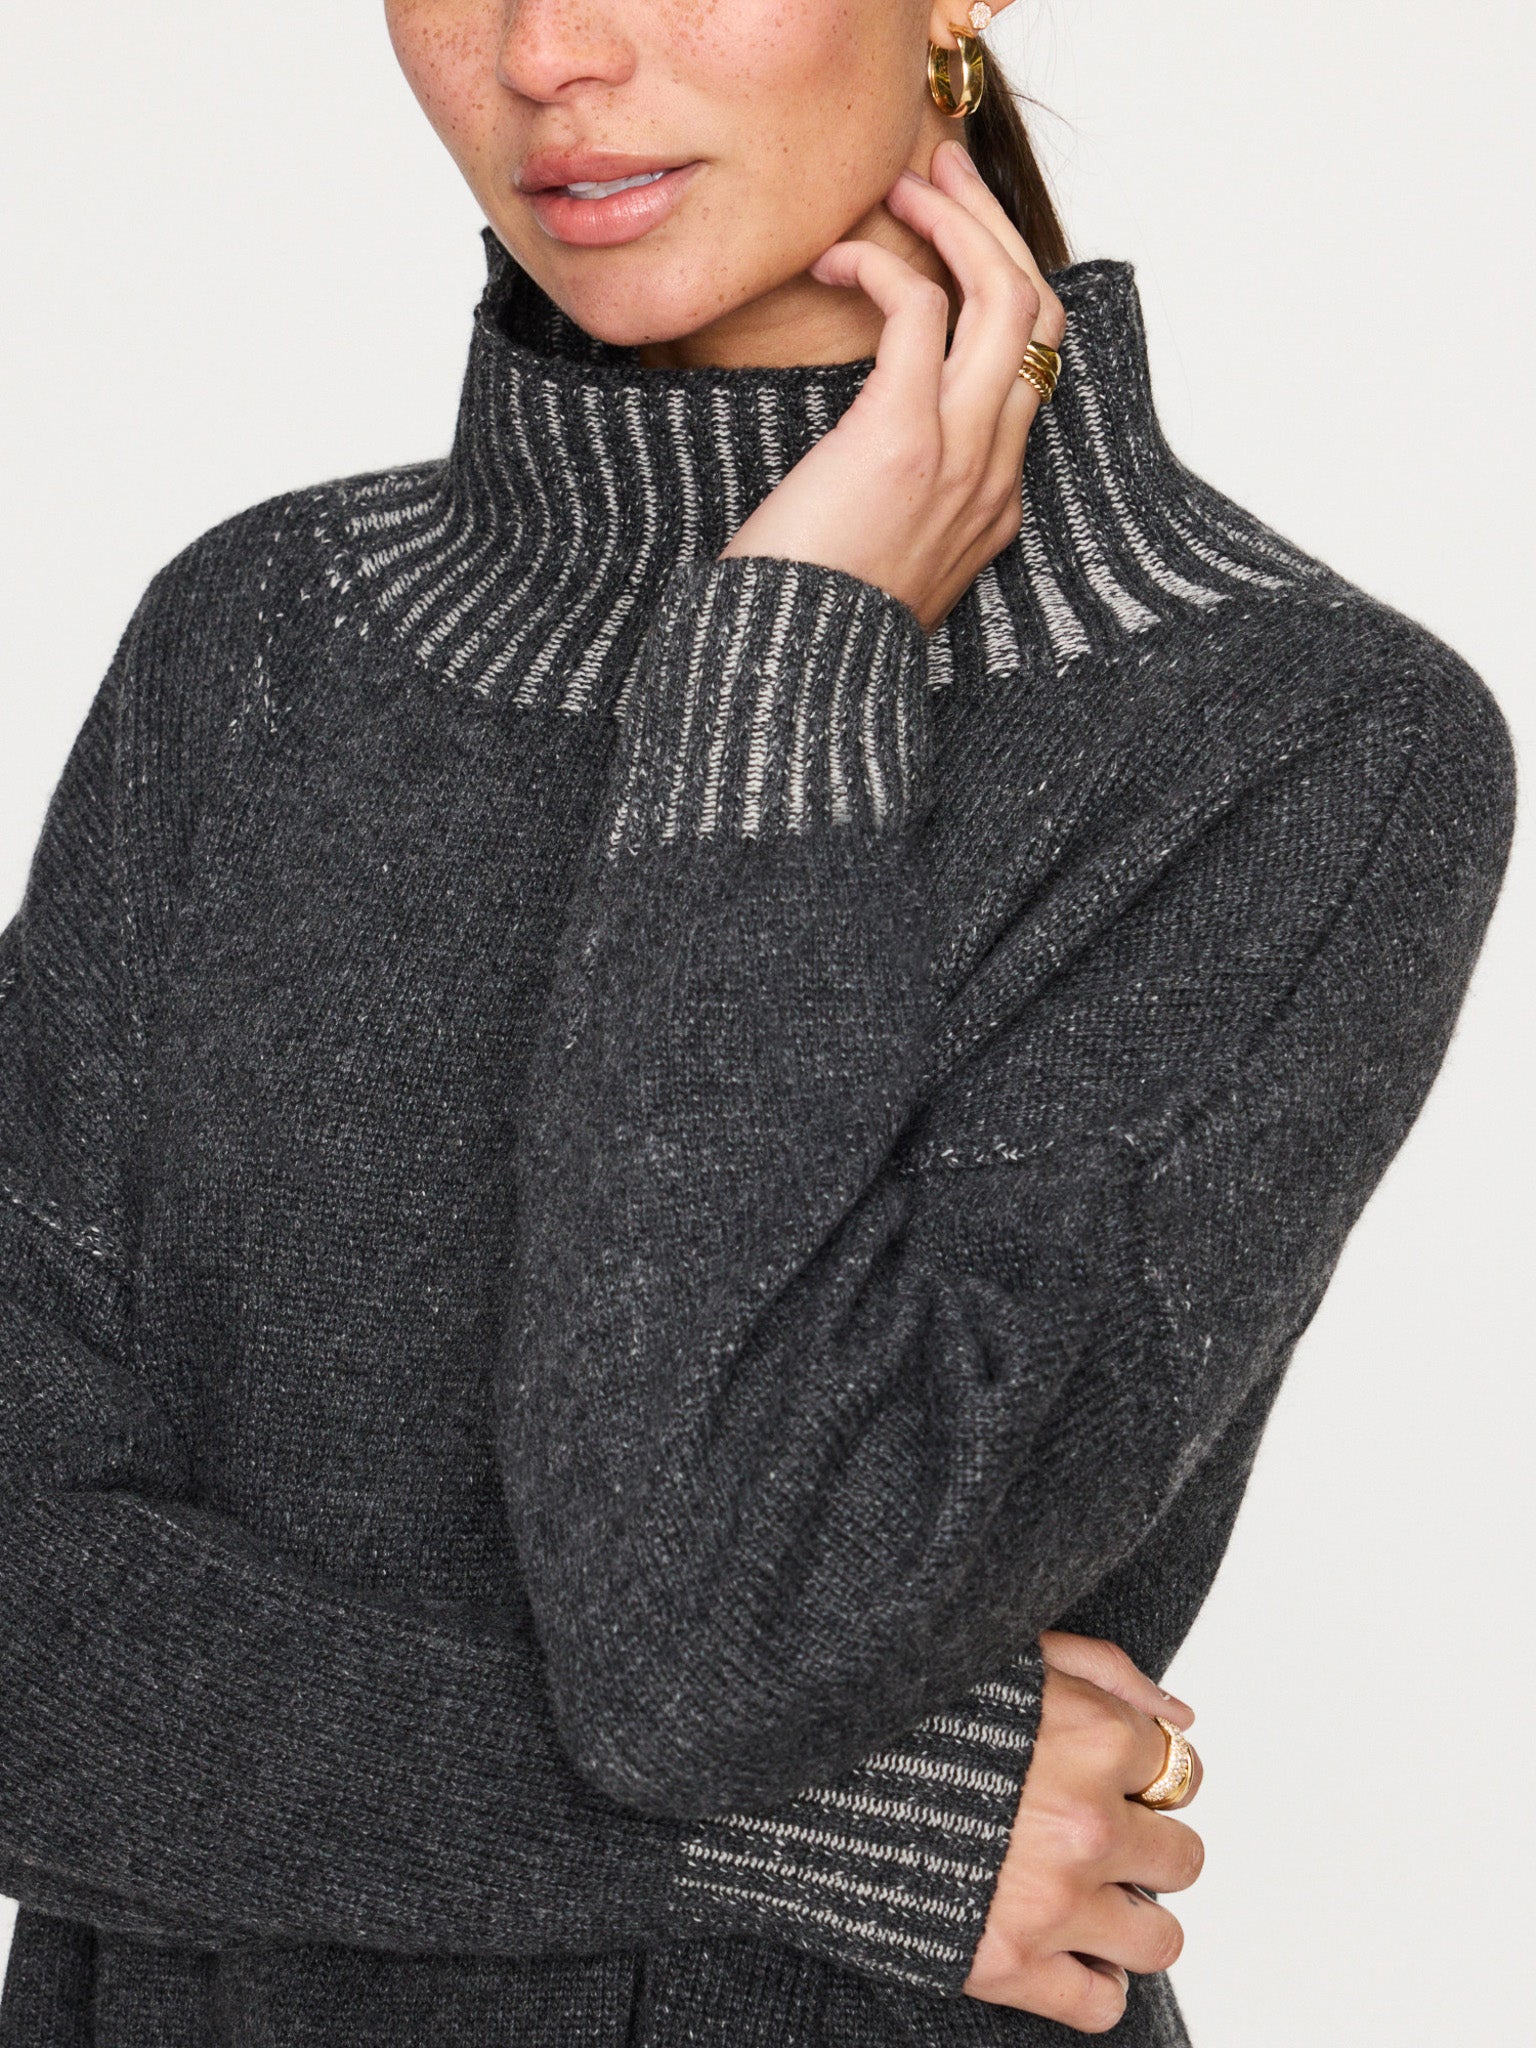 Ana gray turtleneck sweater close up